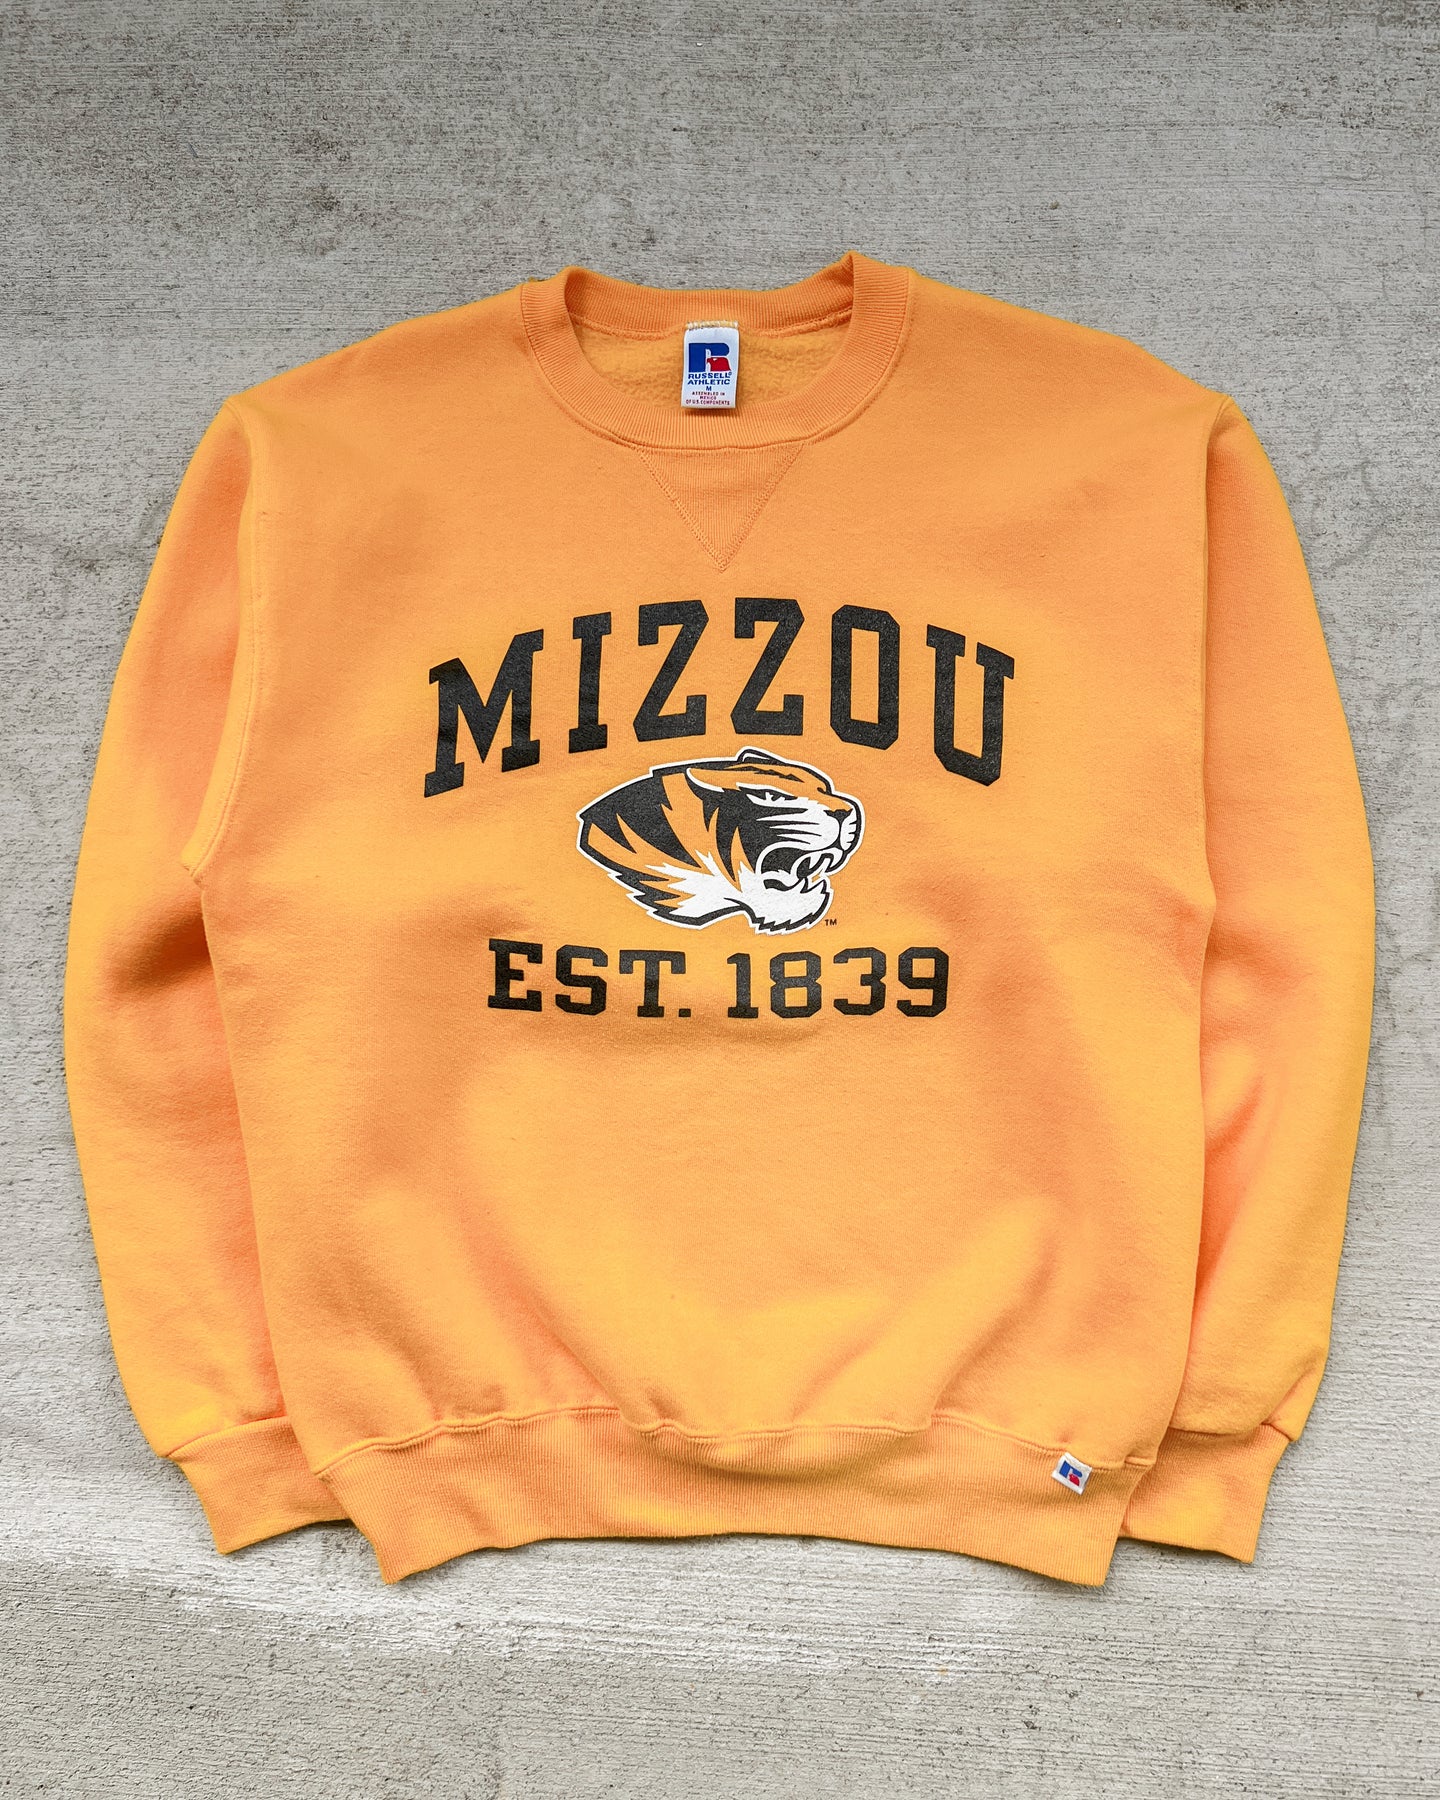 1990s Russell Athletic Mizzou Crewneck Sweatshirt - Size Medium